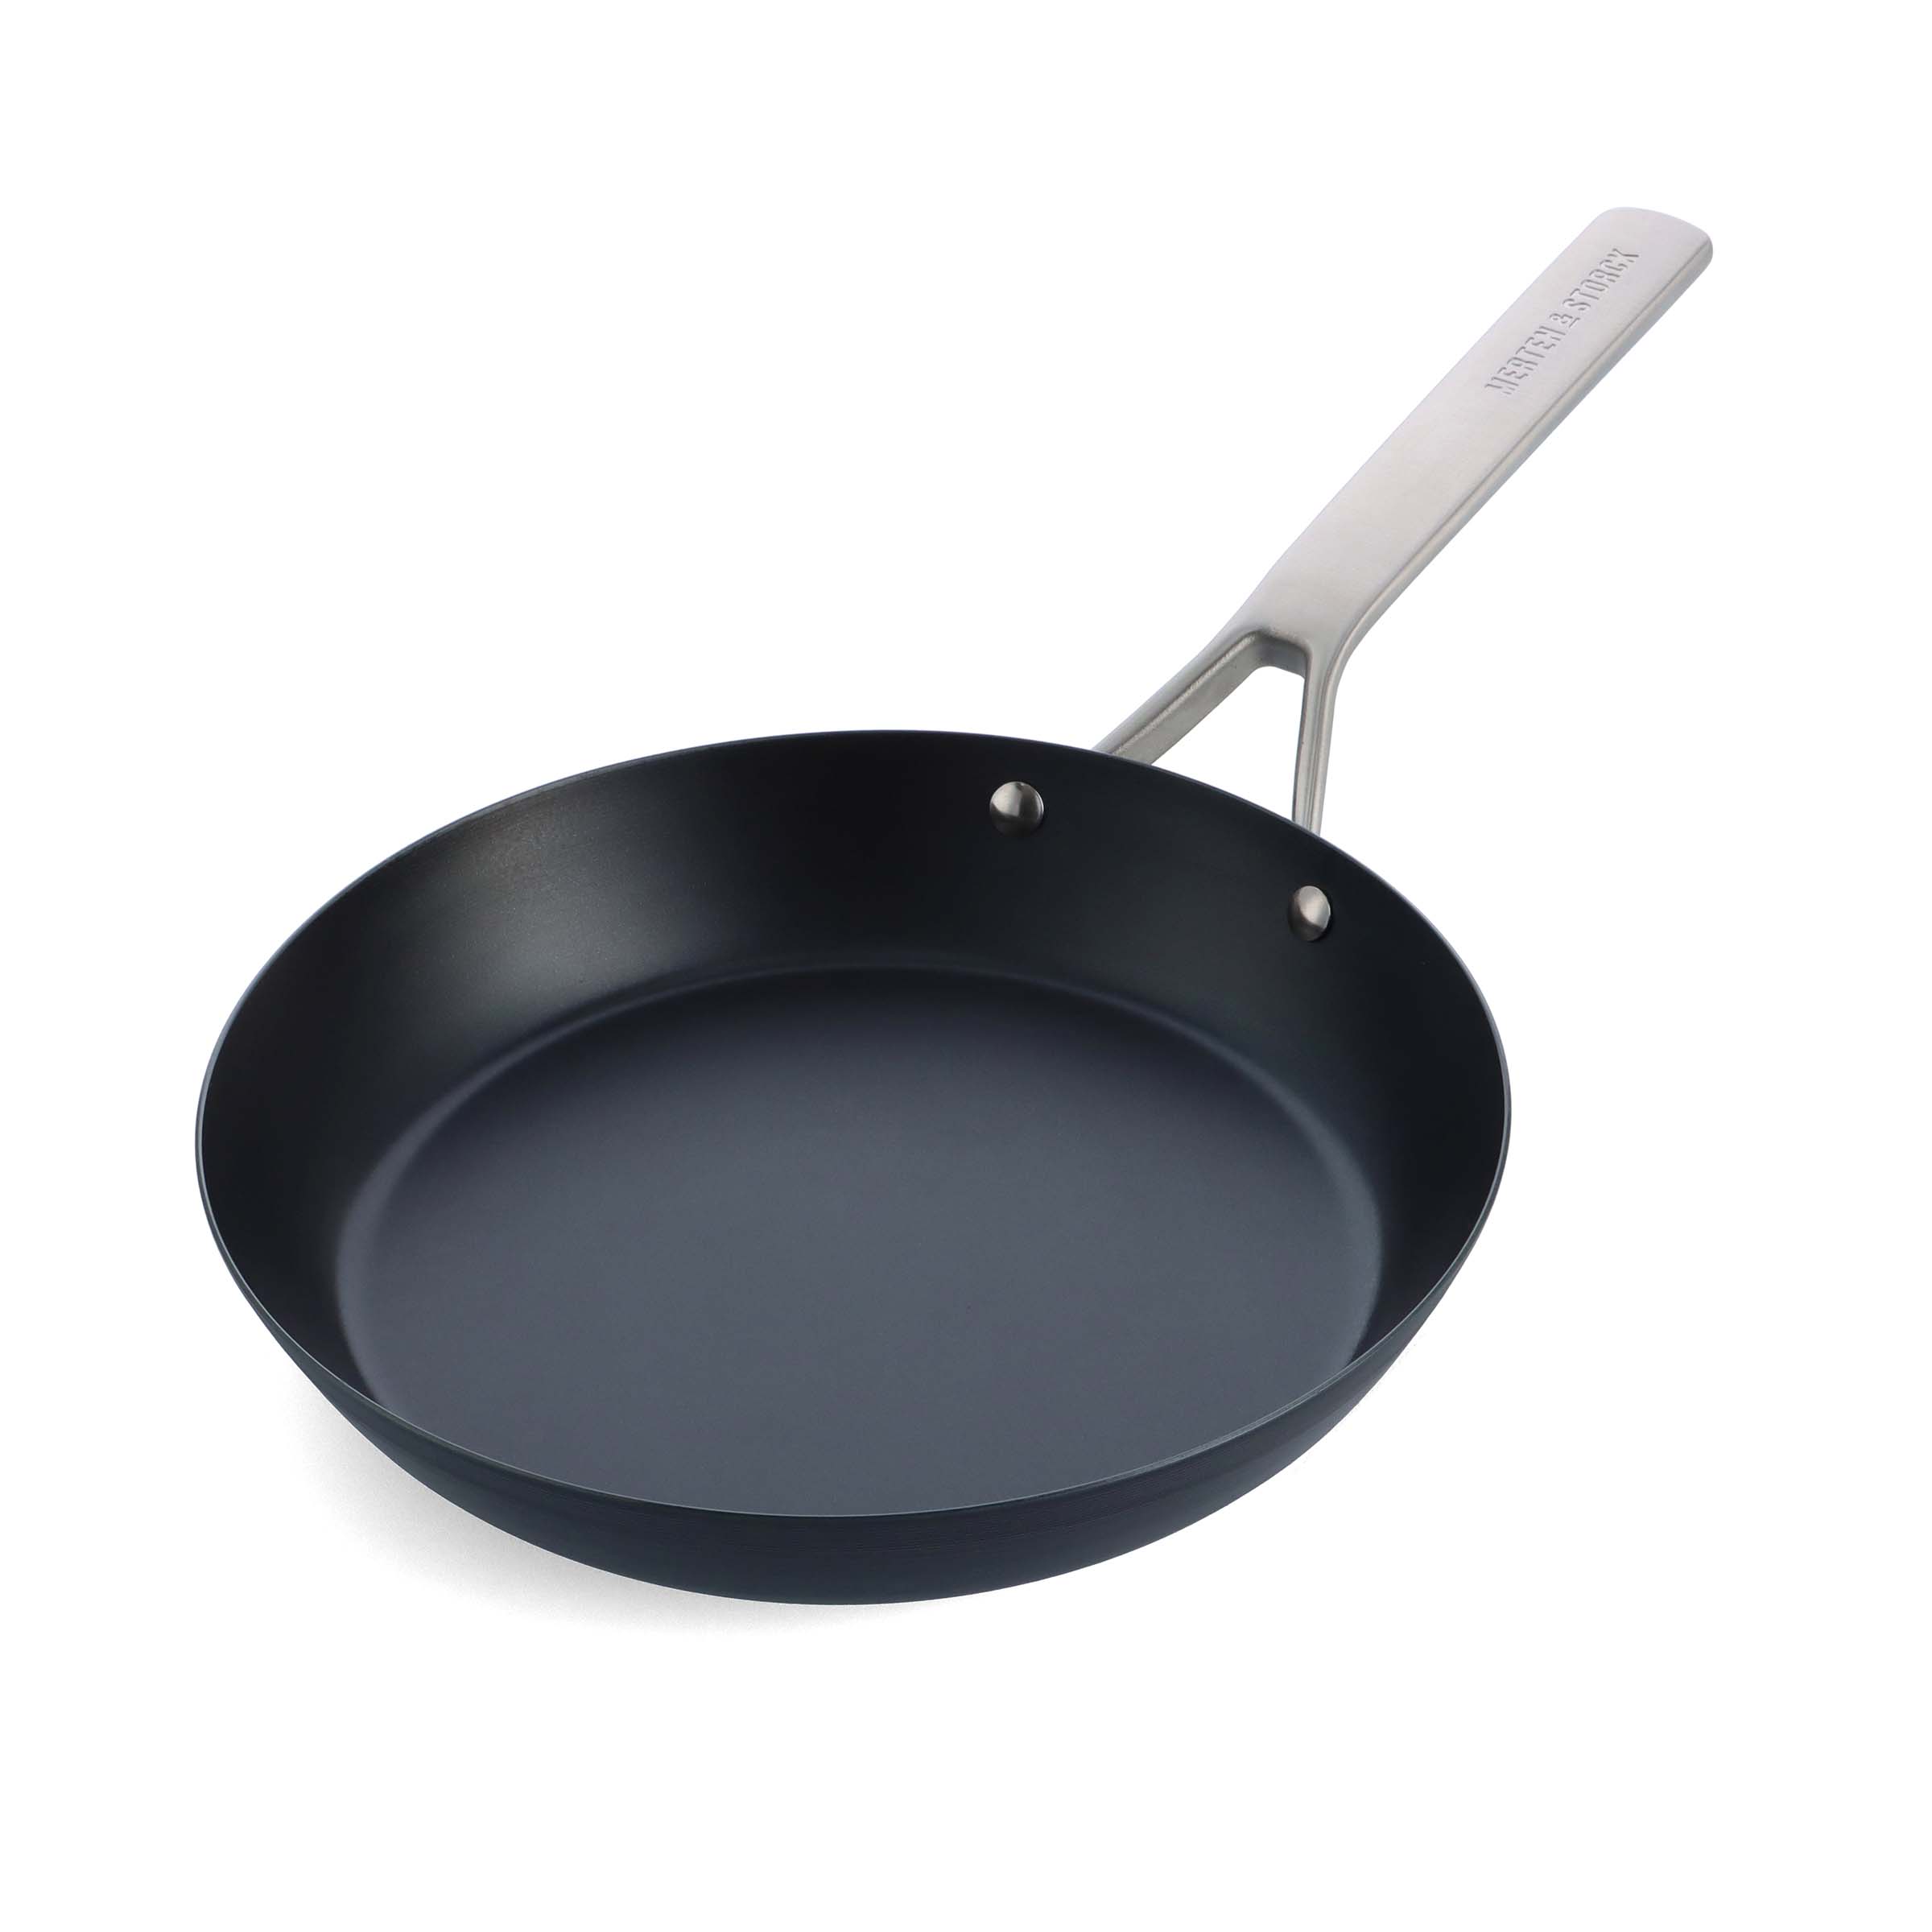 Merten & Storck Pre-Seasoned Carbon Steel Pro Induction 10" Frying Pan Skillet, Black - image 1 of 7